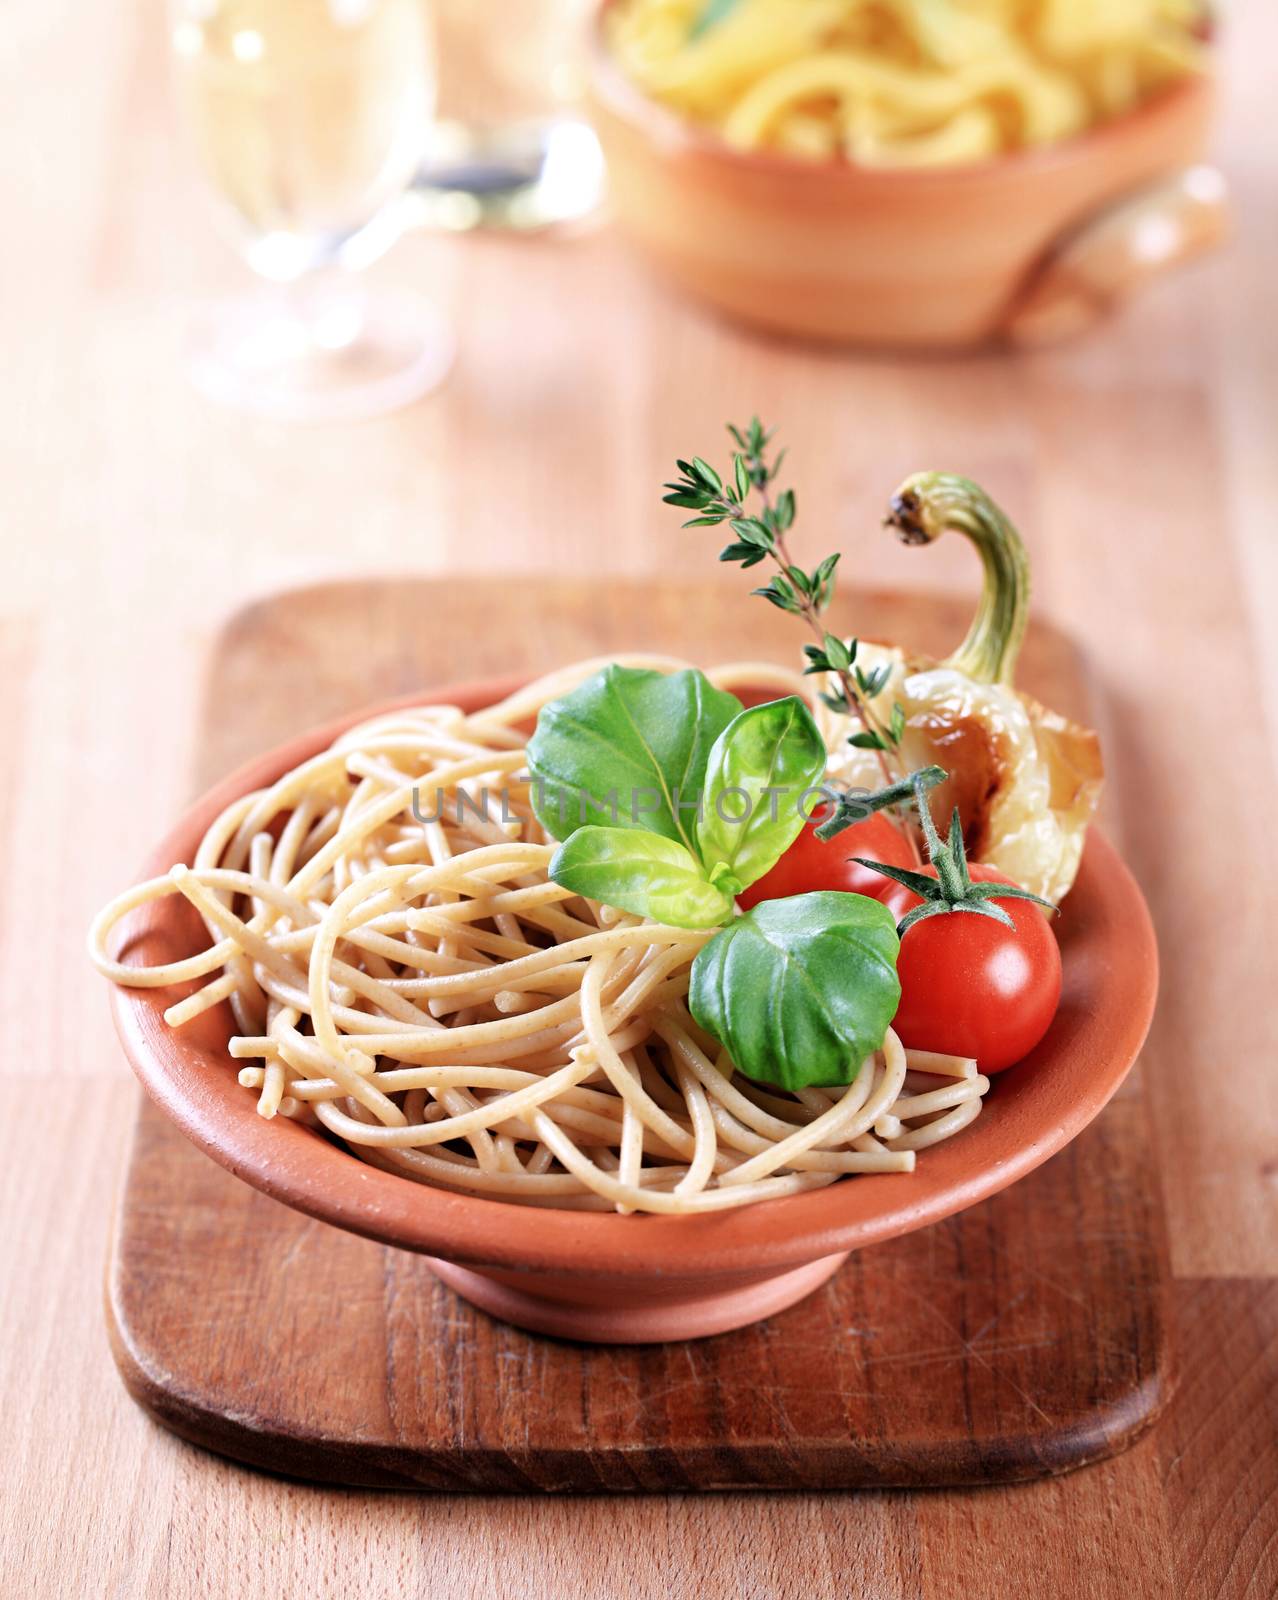 Whole wheat spaghetti by Digifoodstock